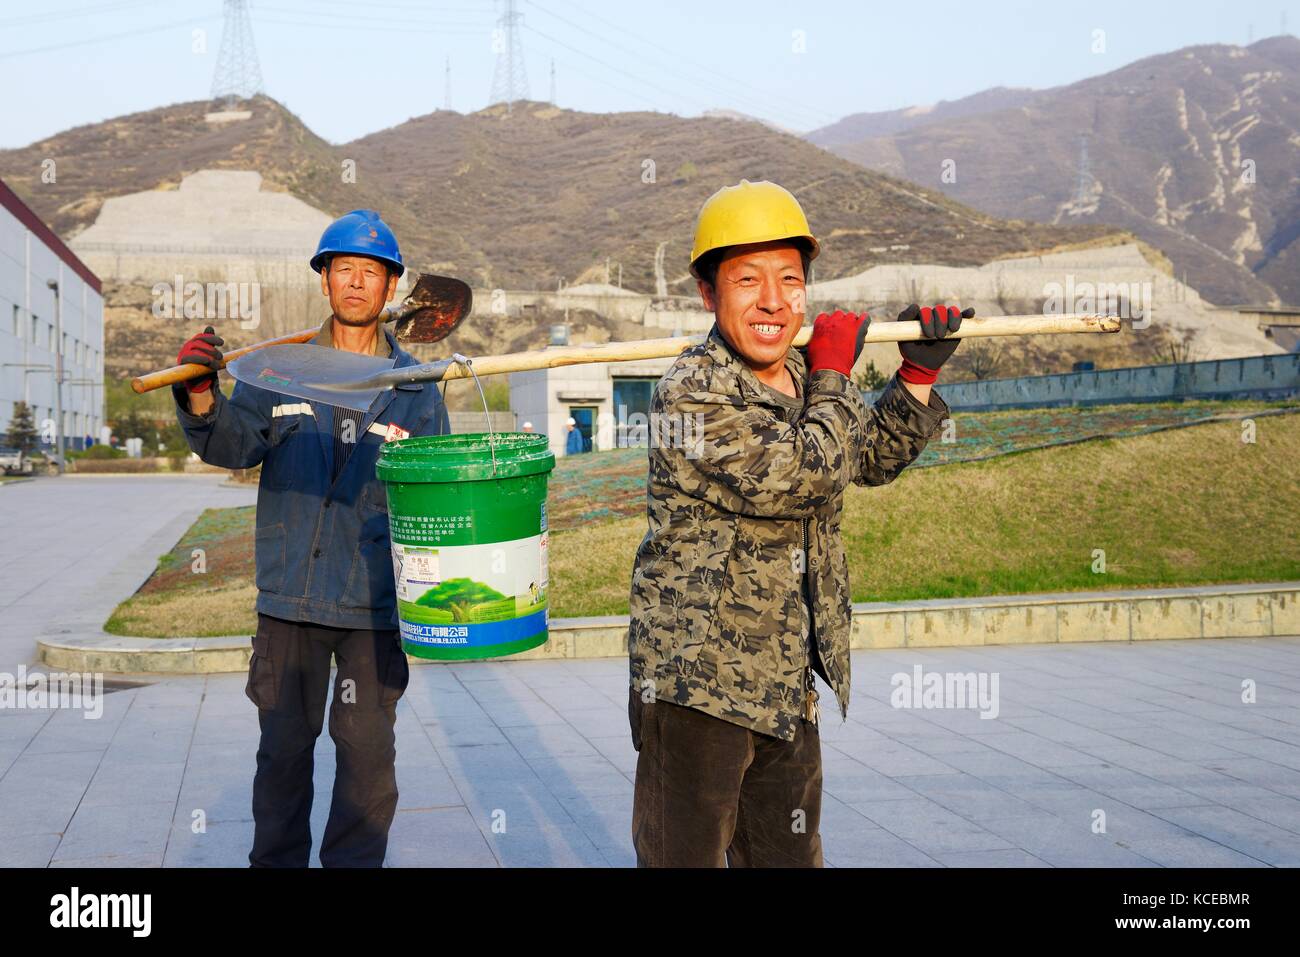 Arbeiter Arbeiter am Ende der Schicht am ultra-moderne Kohle 1.320 Megawatt Kraftwerk der tonghua xuangang Kraftwerk in yuanping, Shanxi, China Stockfoto